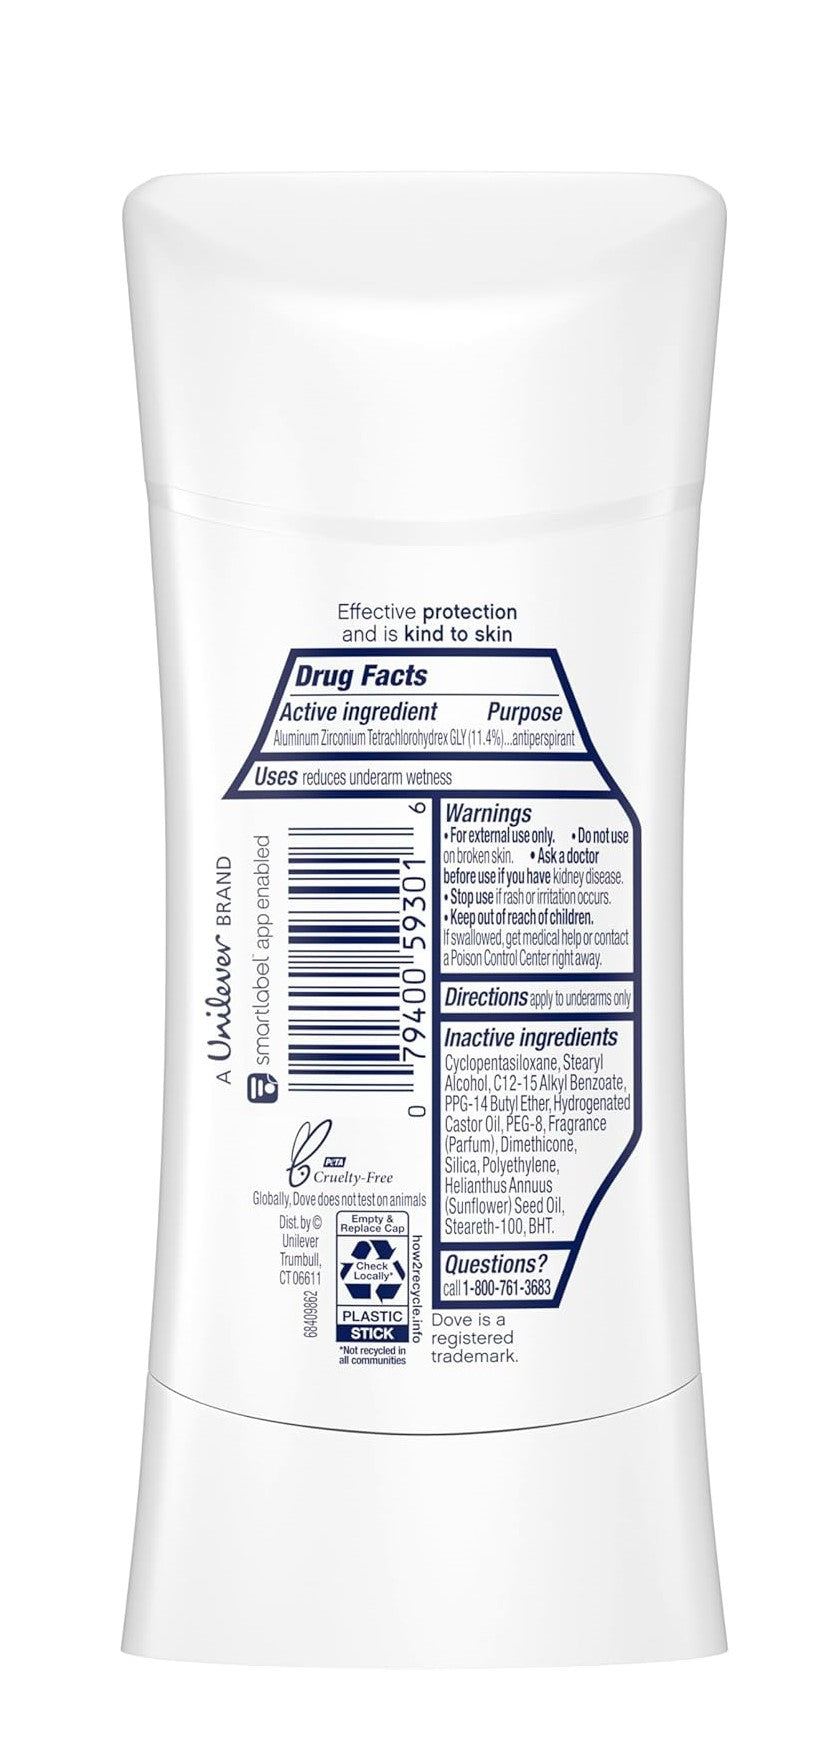 Dove Advanced Care Antiperspirant Deodorant Stick Finish 48-Hour -74gm